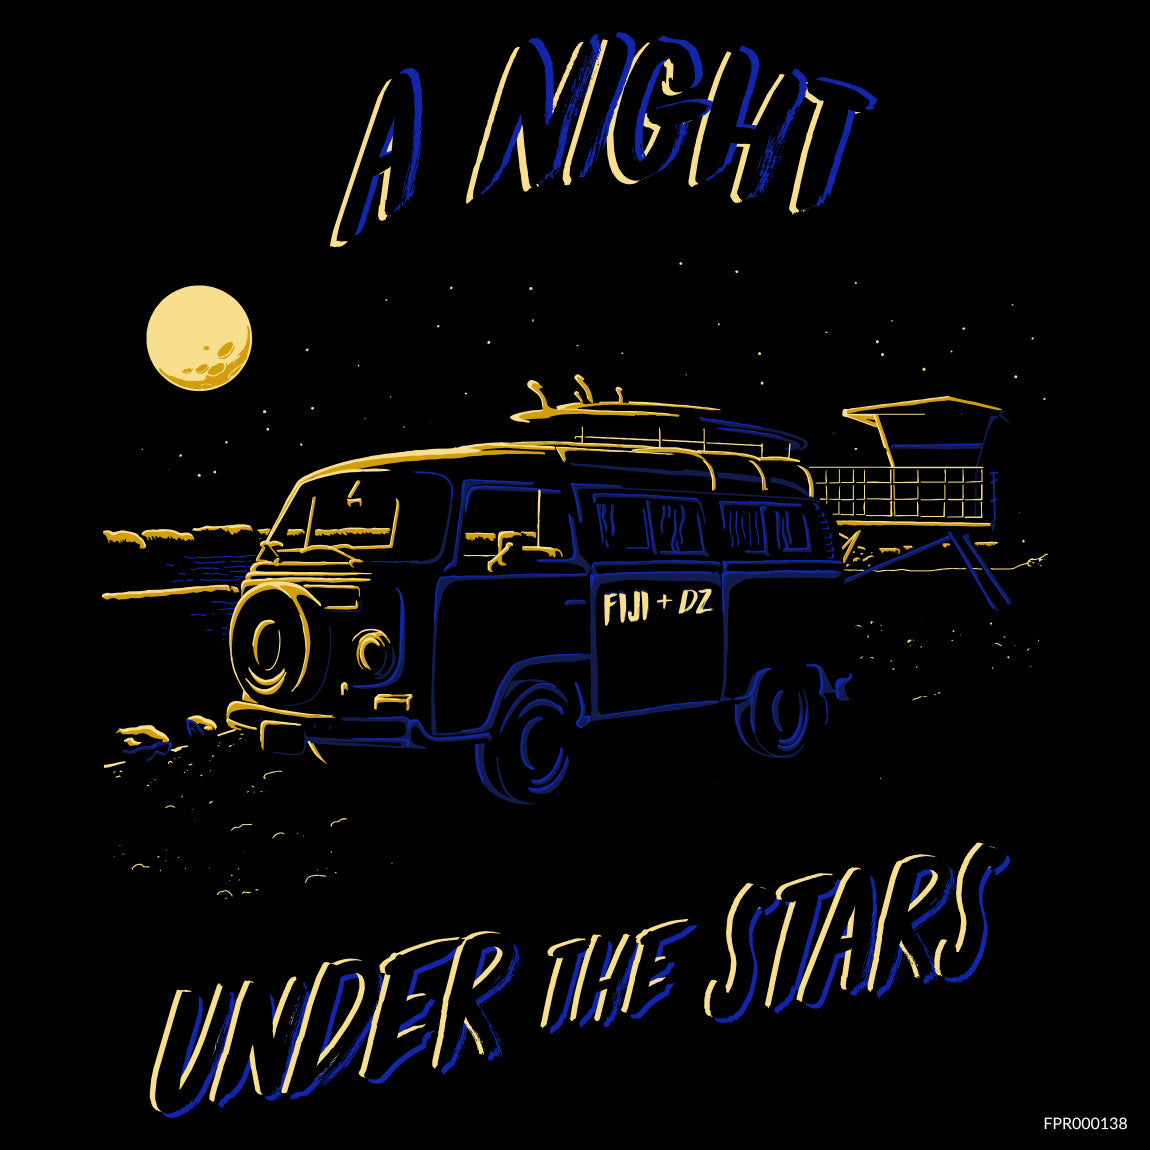 A Night Under the Stars